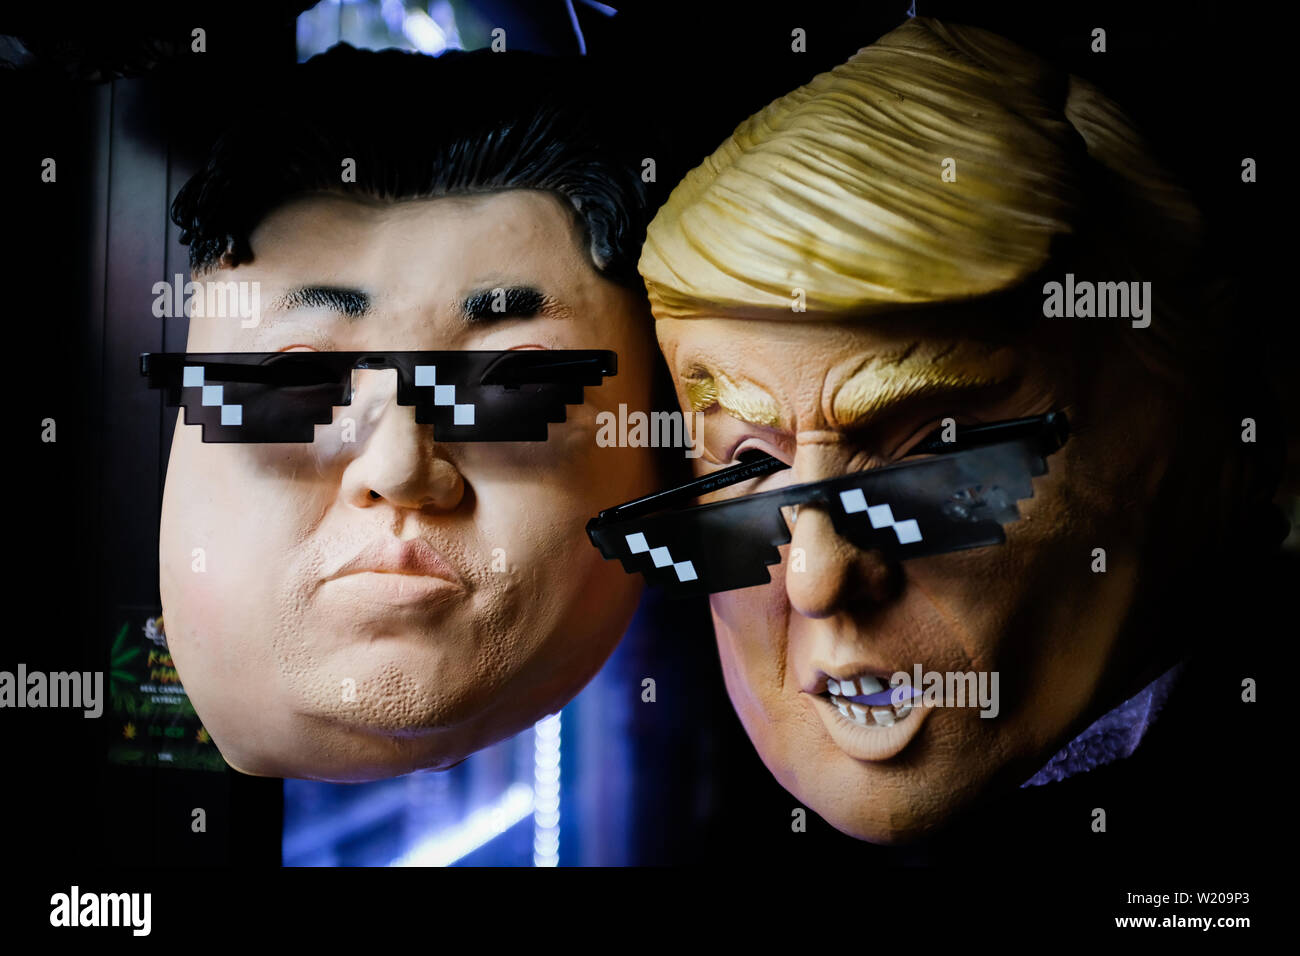 Masks of Kim Jong Un and Donald Trump in London, England, shop. Stock Photo